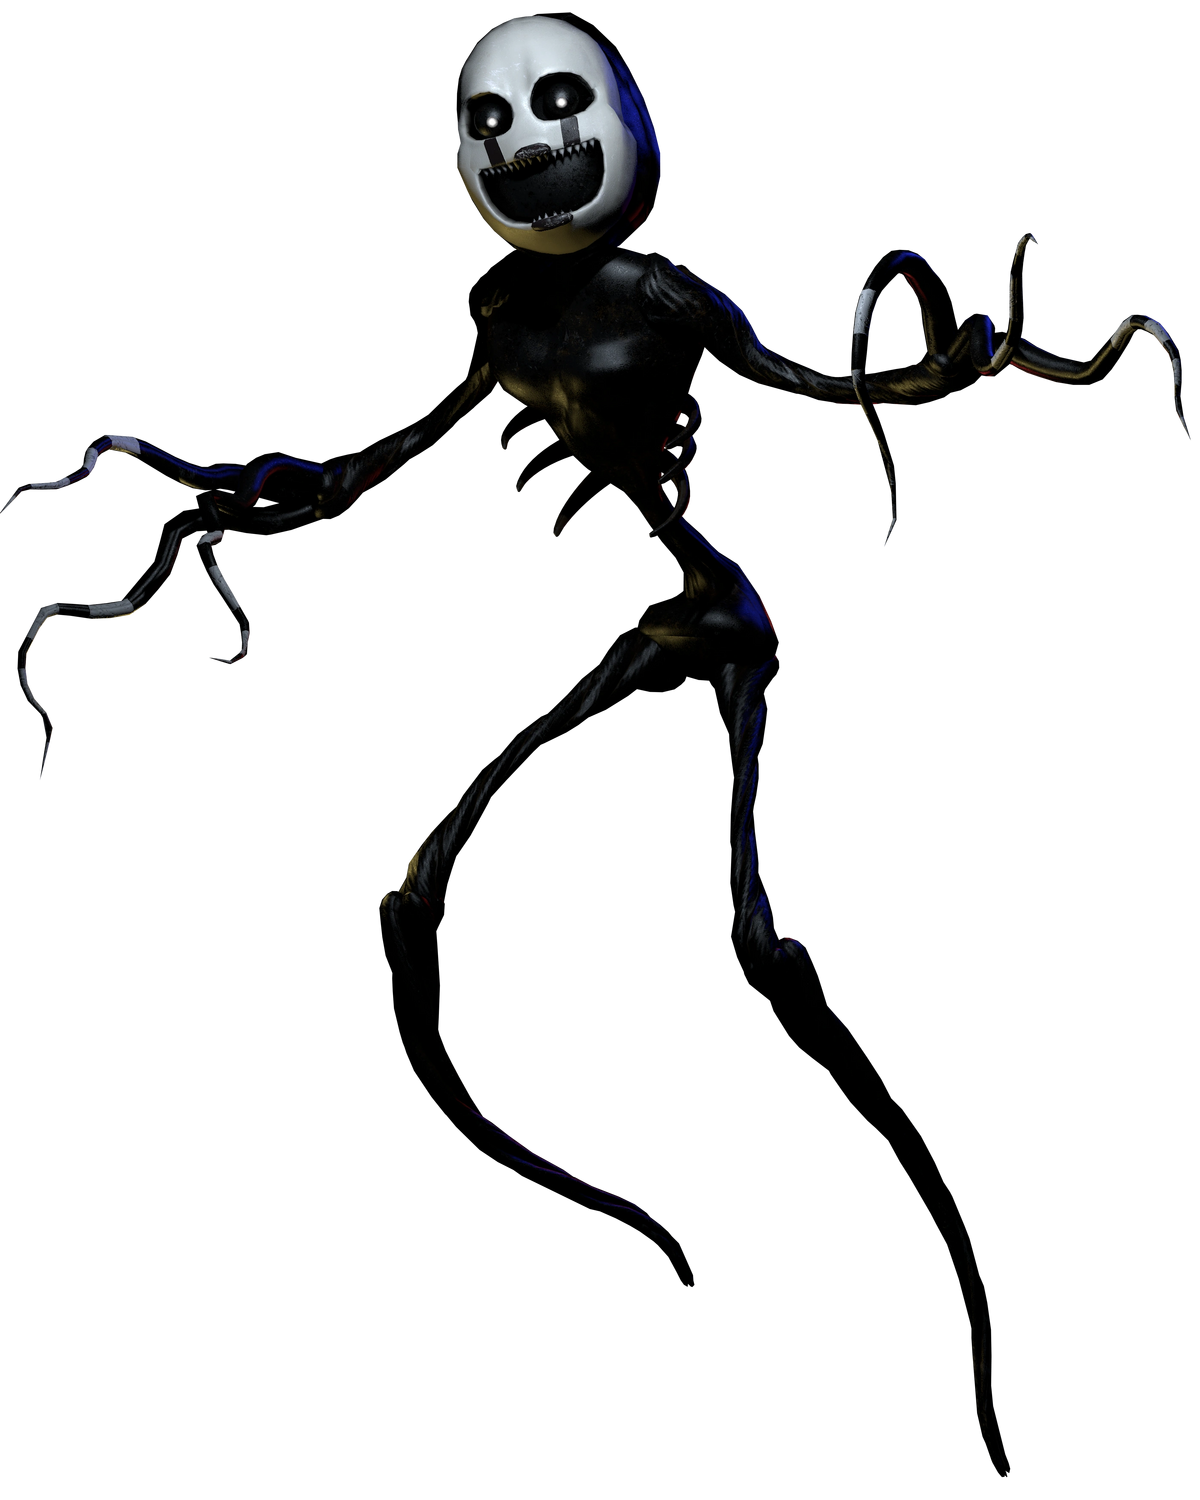 Nightmare Puppet - Hello everybody here is a screenshoot nightmare